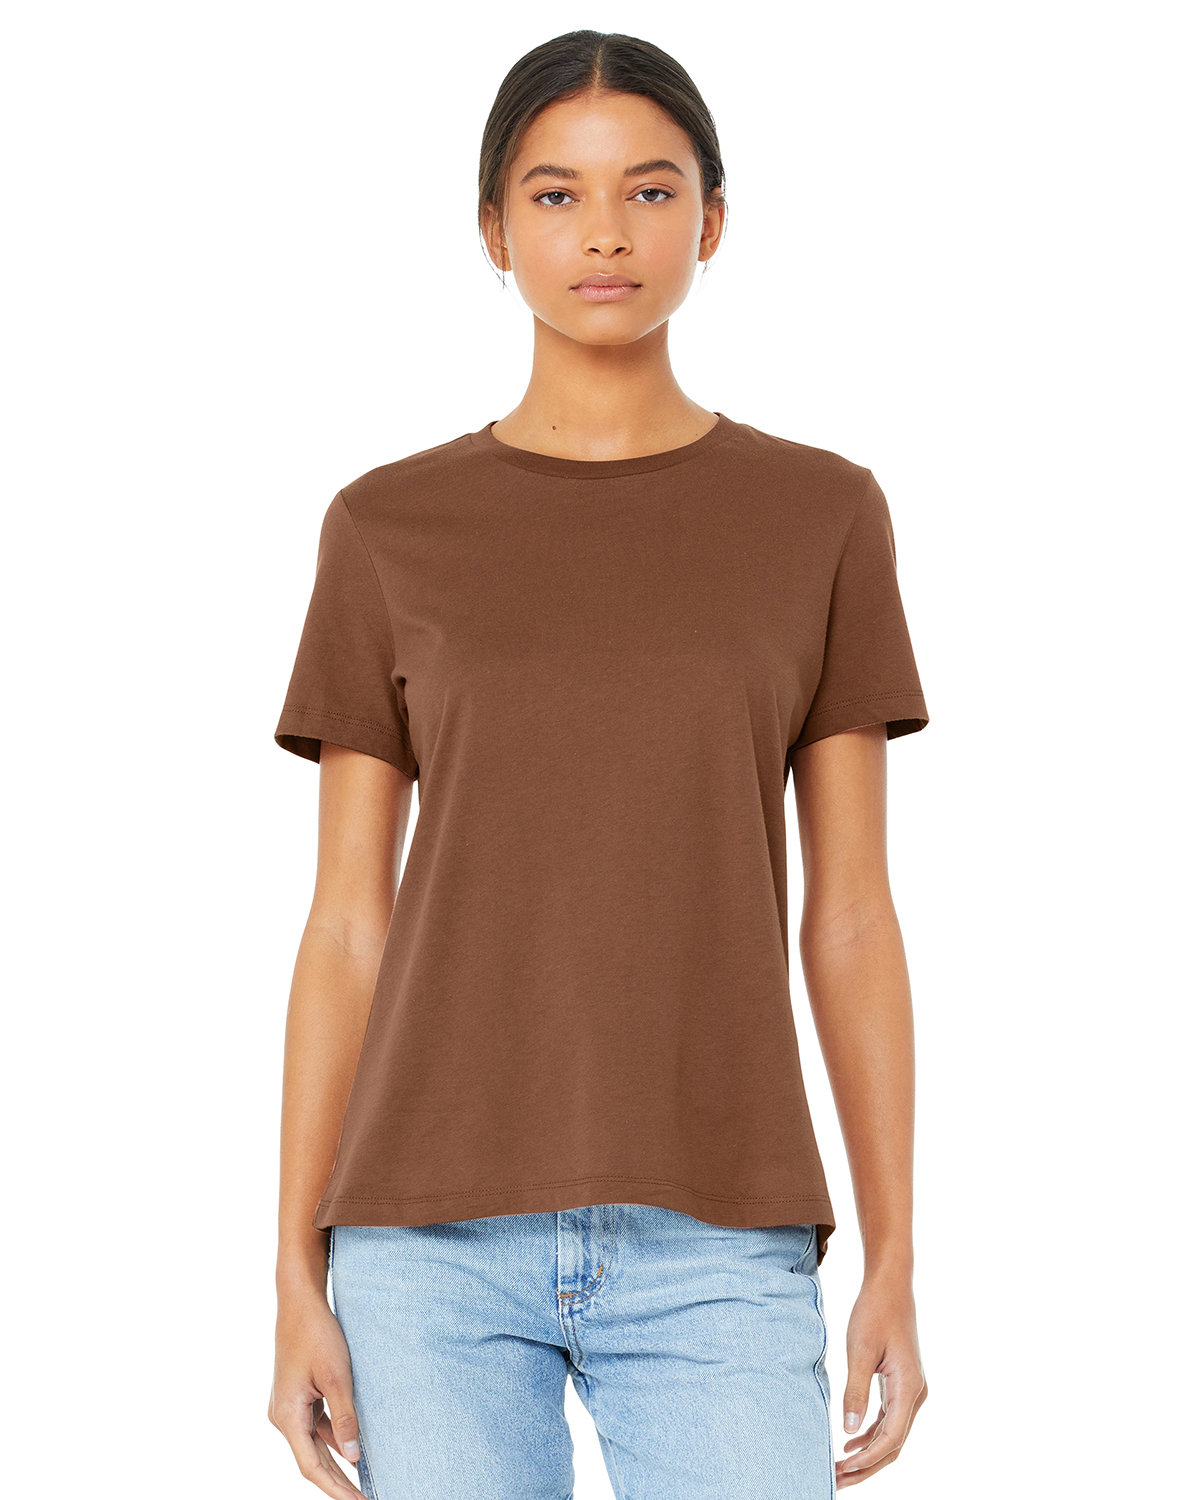 Custom Branded Bella+Canvas T-Shirts - Chestnut